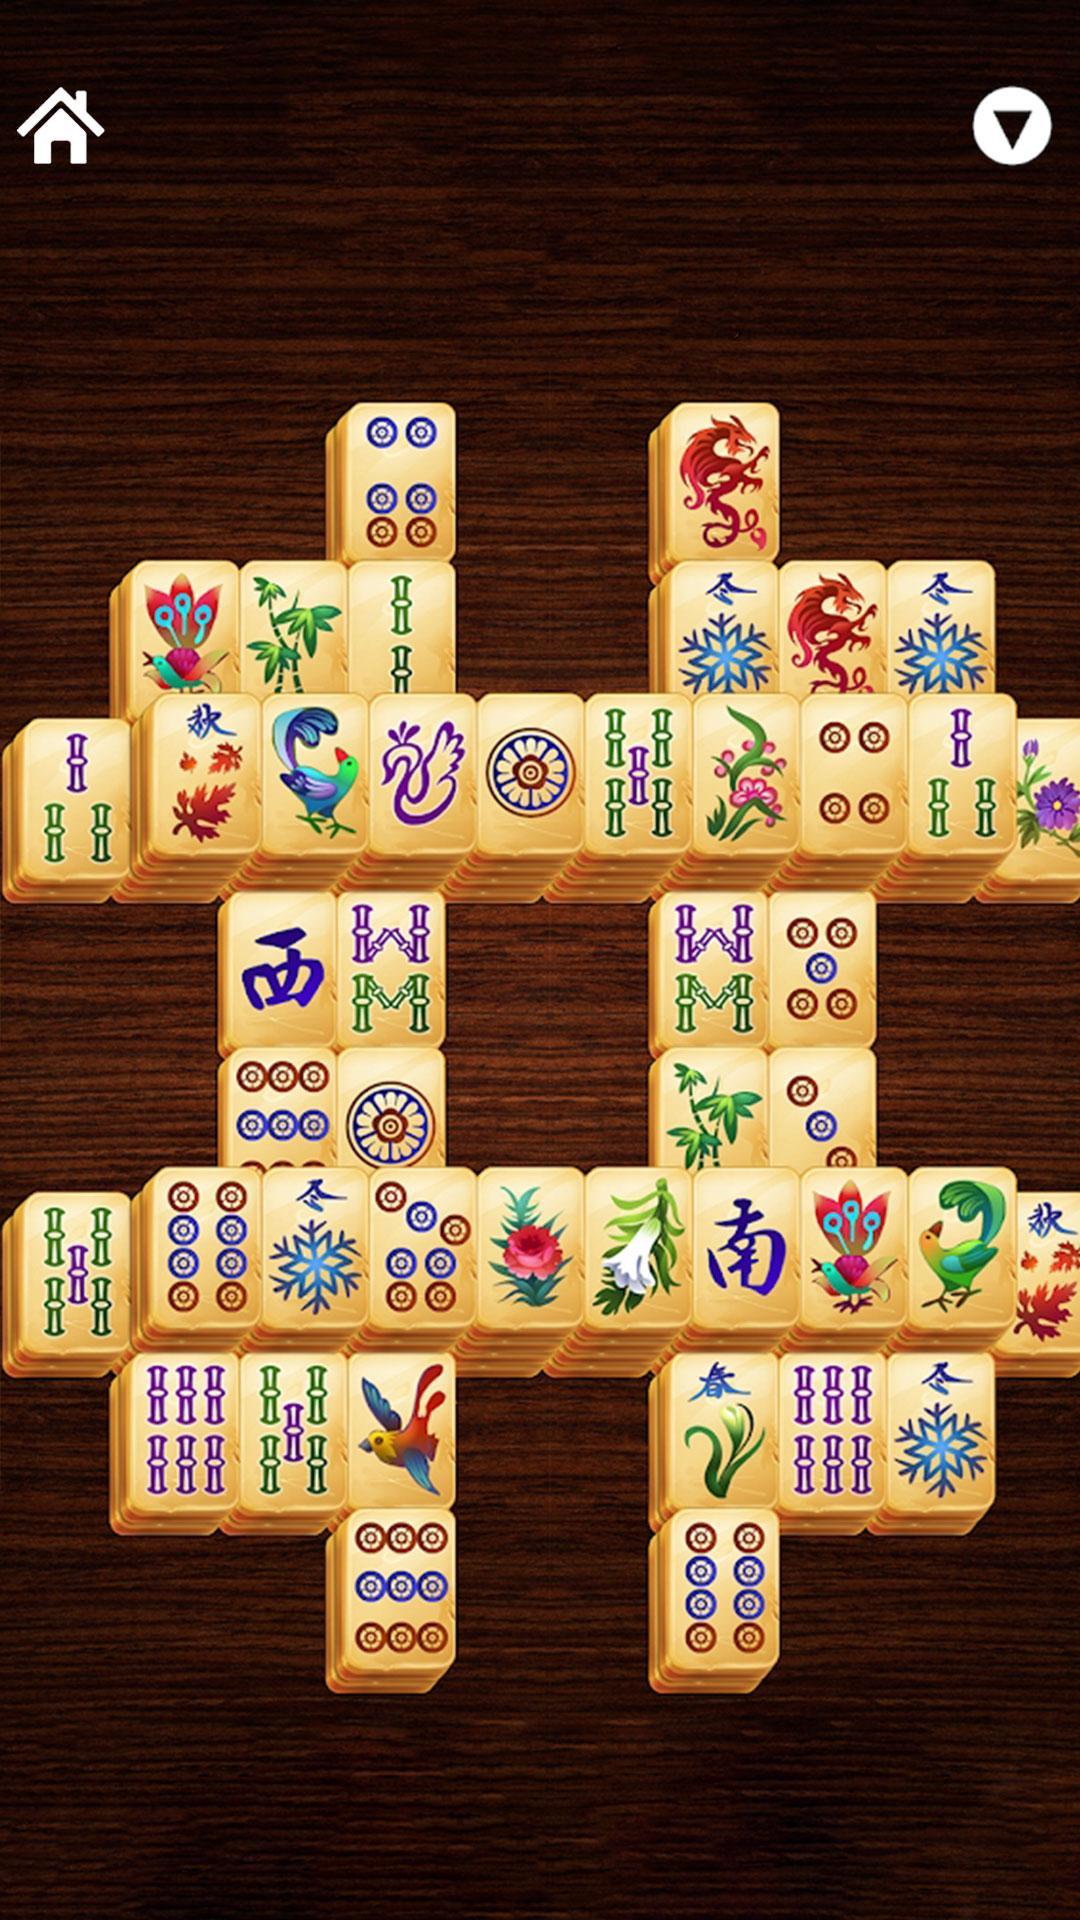 Screenshot 1 of Mahjong match 1.0.0